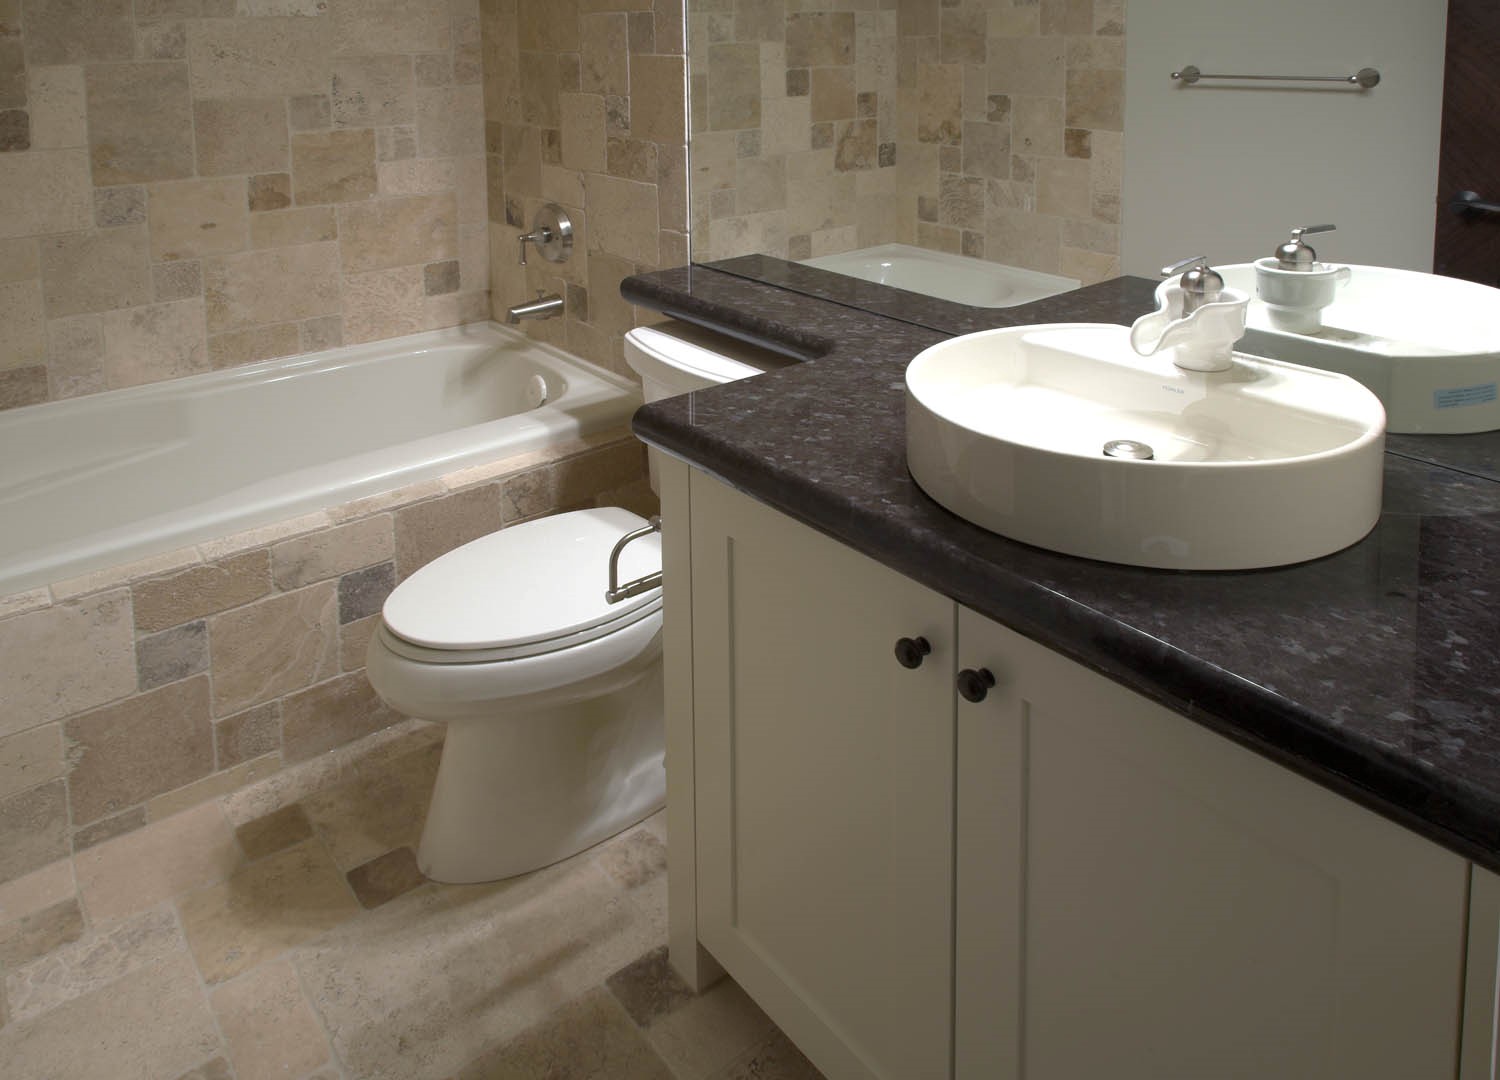 white bathroom sink installed in granite counter